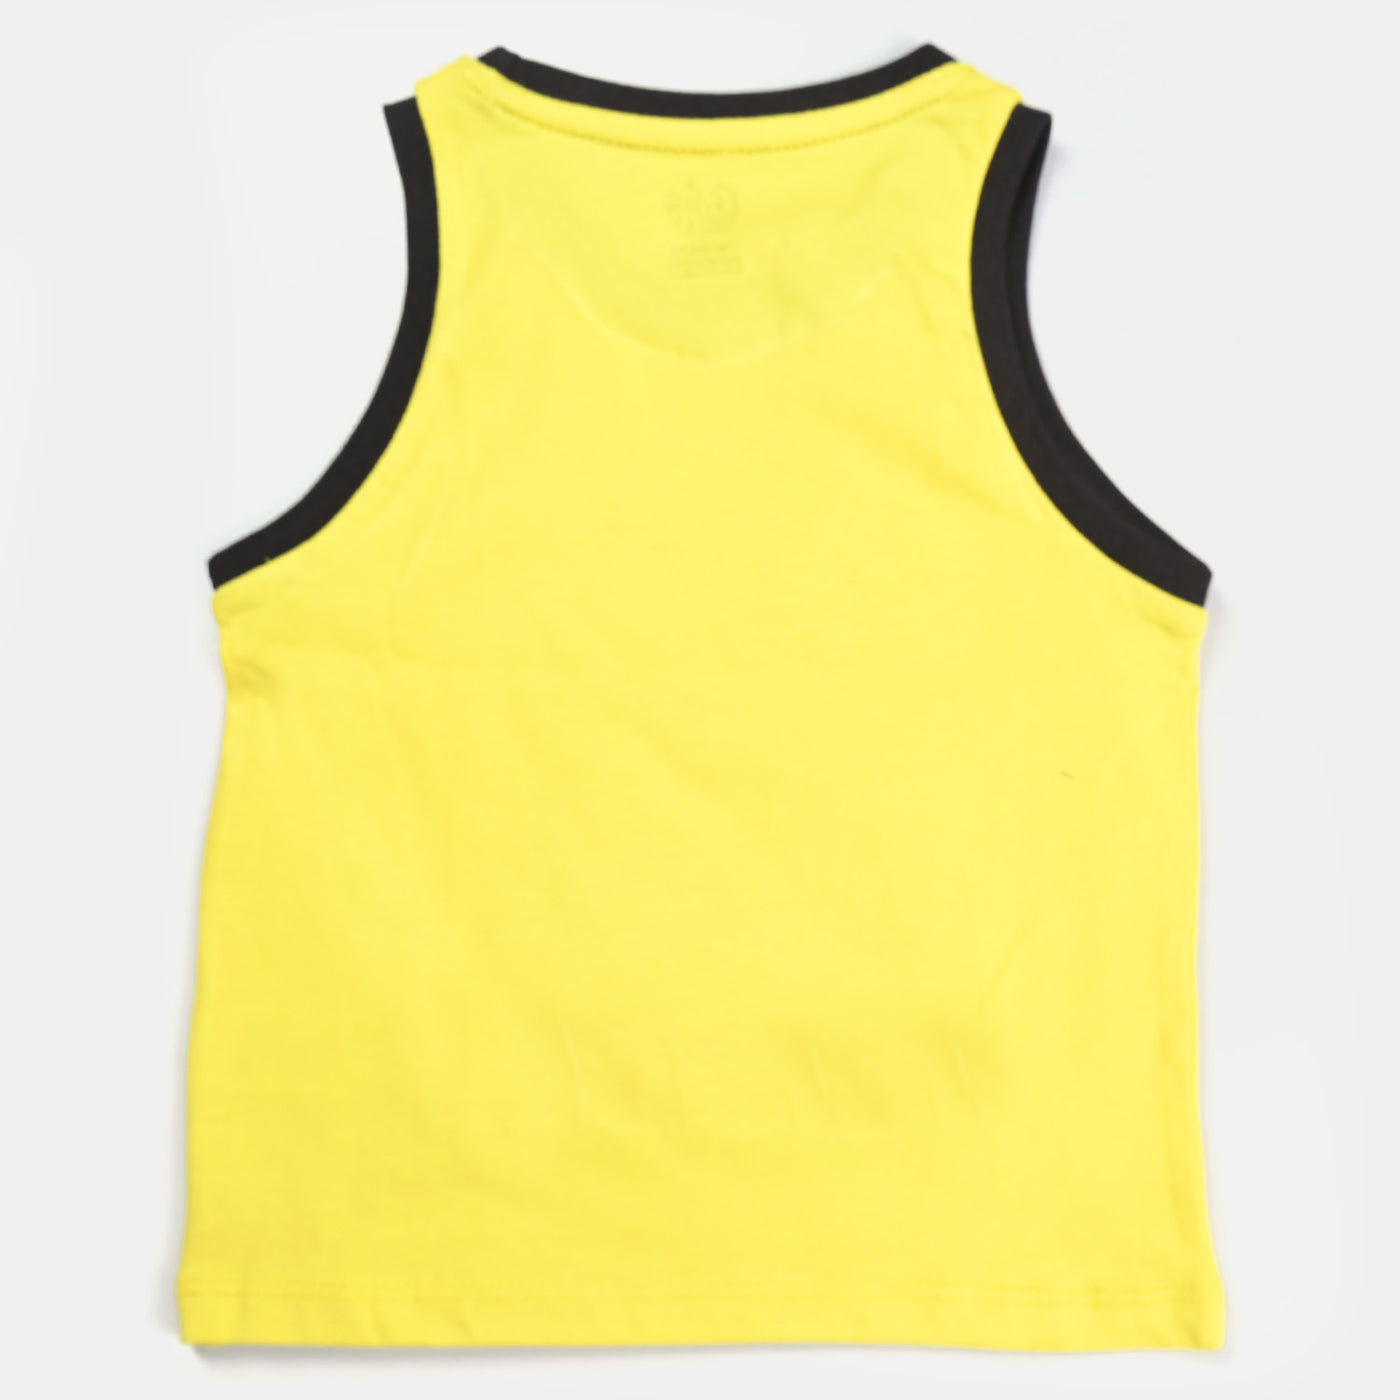 Infant Boys Cotton Jersey Sando Character -B-Yellow